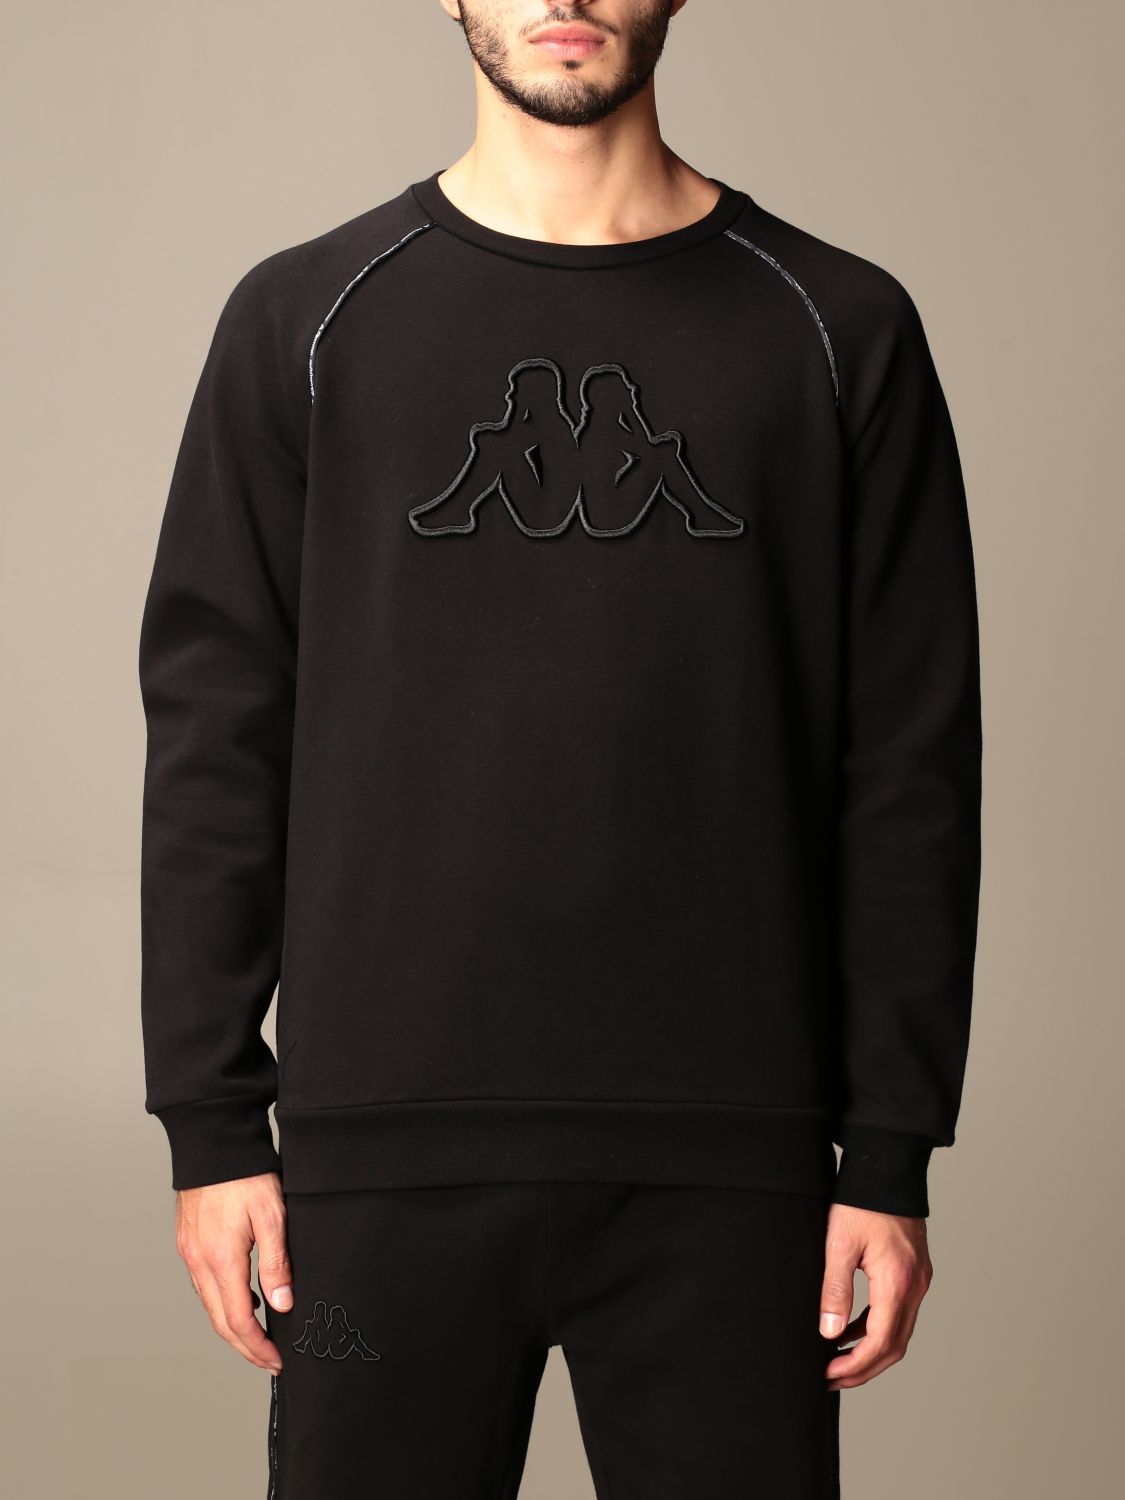 crewneck sweatshirt with logo - Black | Kappa sweatshirt online on GIGLIO.COM